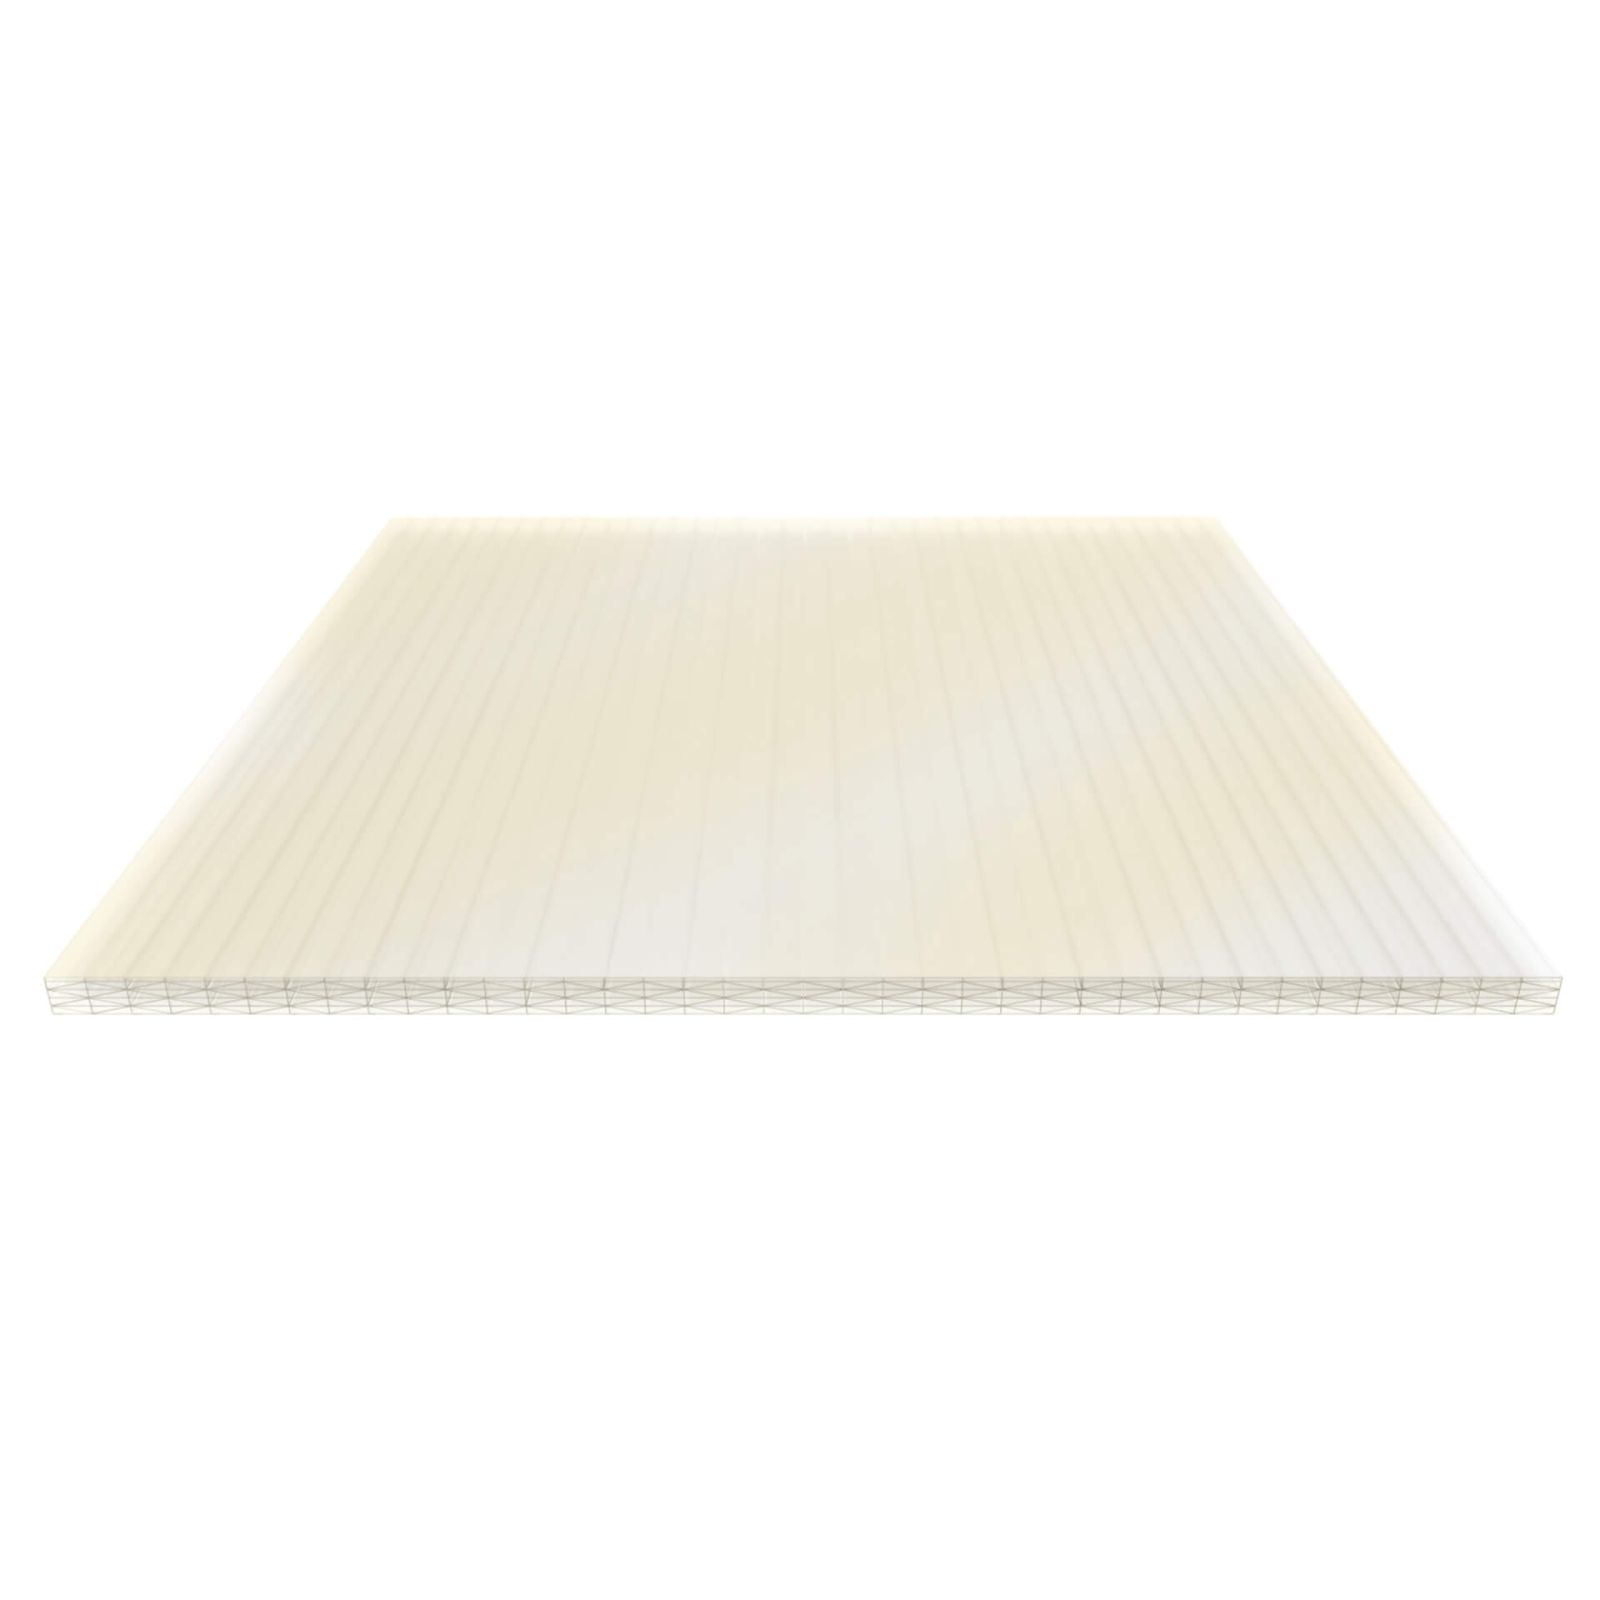 Polycarbonat Stegplatte | 32 mm | Profil Mendiger | Sparpaket | Plattenbreite 1250 mm | Gold-Opal | Breite 3,91 m | Länge 2,00 m #5